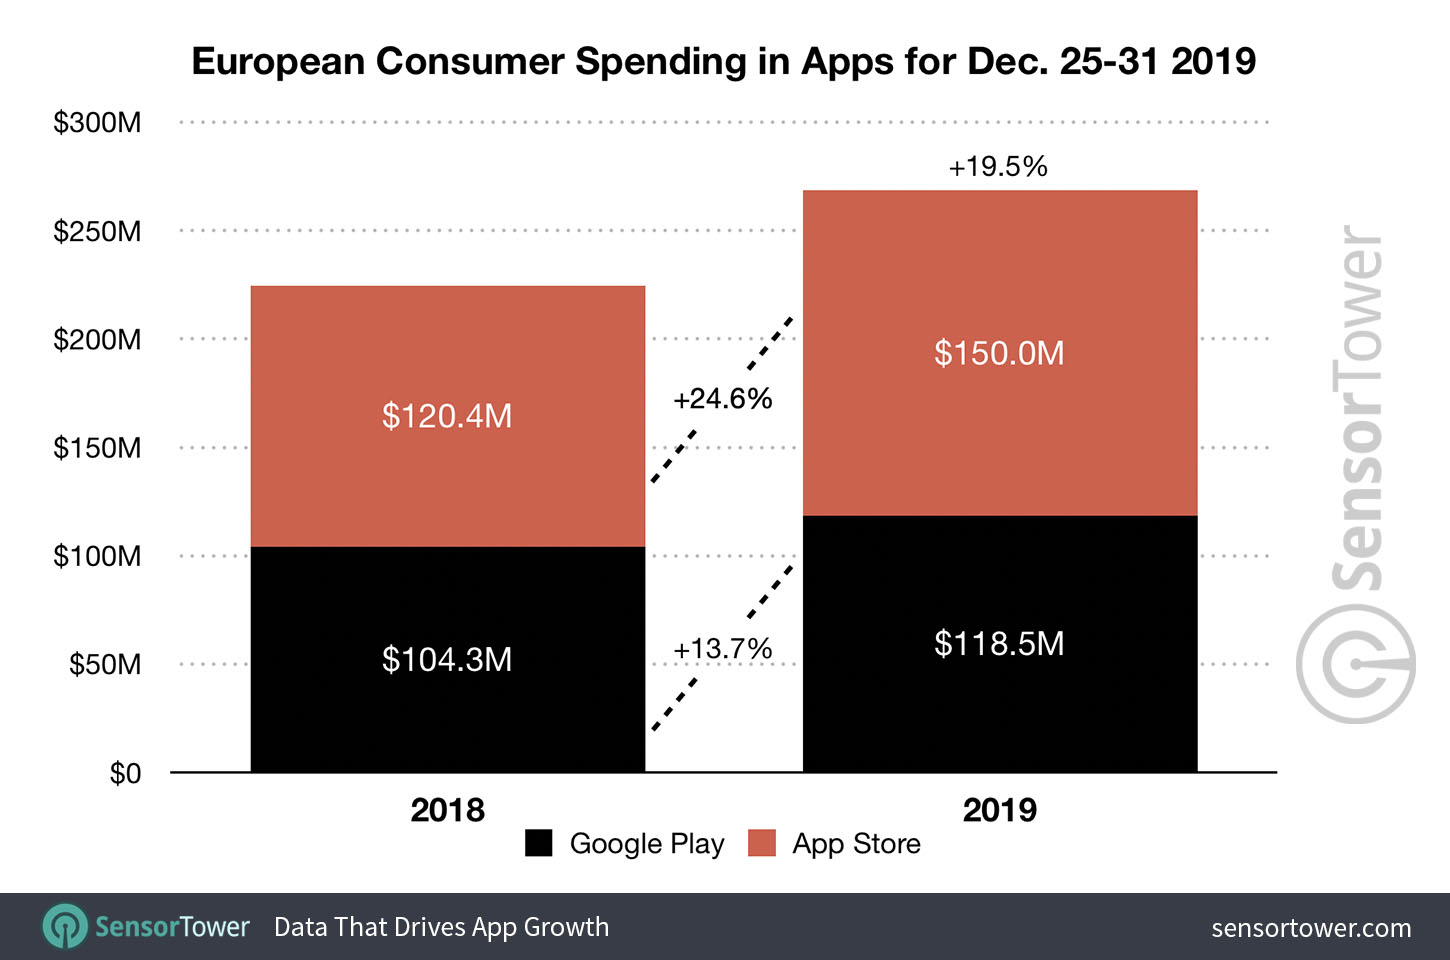 European consumer spending in apps for Dec. 25-31 2019